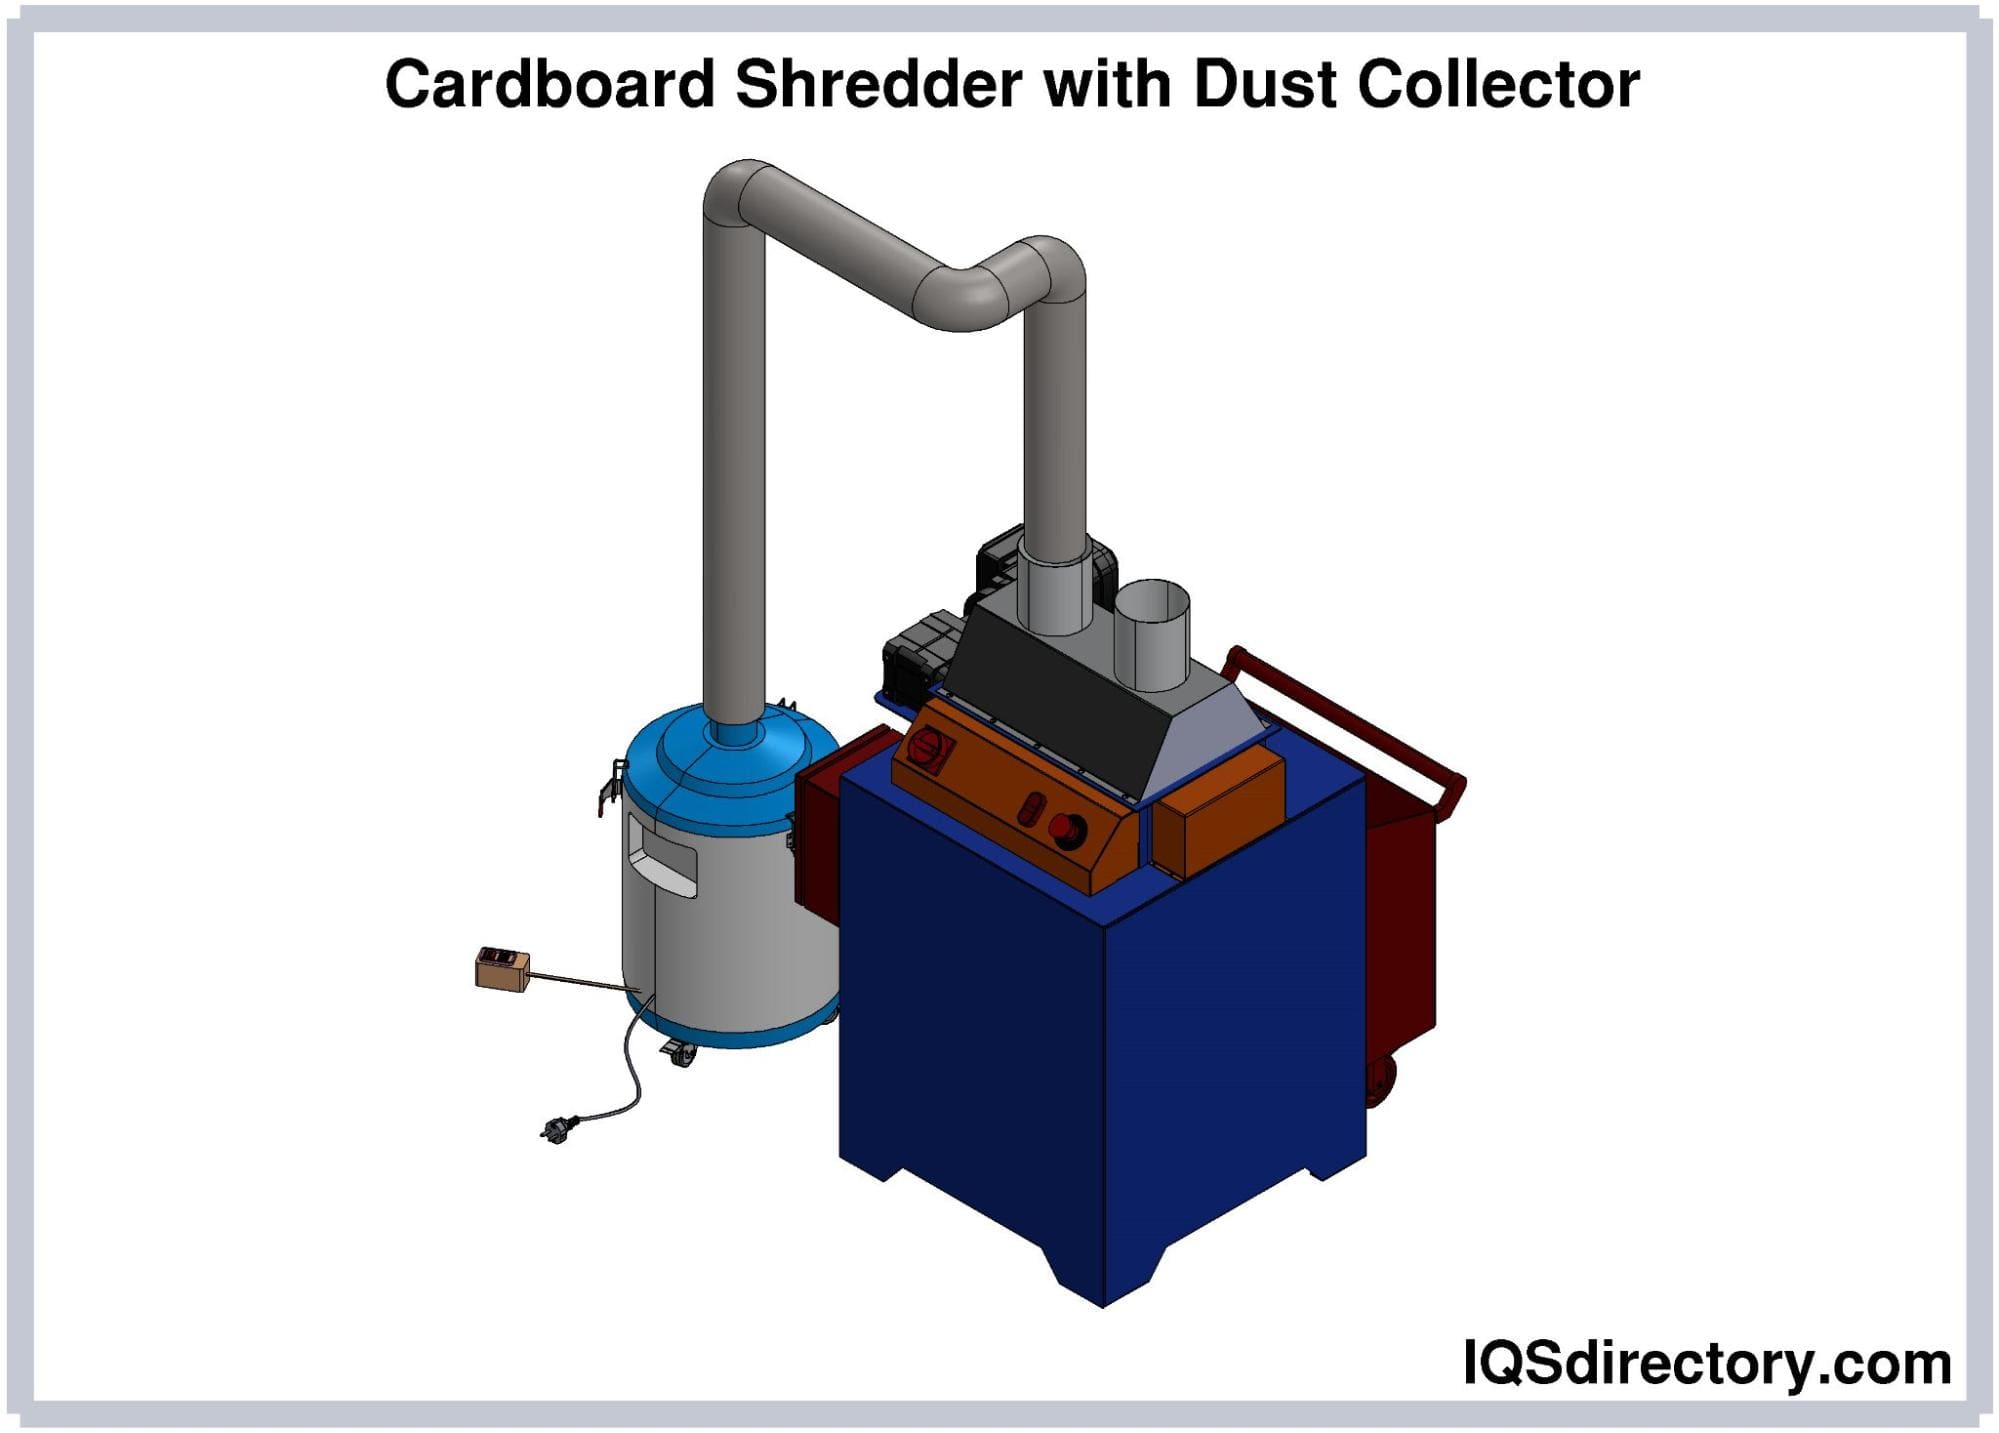 Cardboard Shredder with Dust Collector